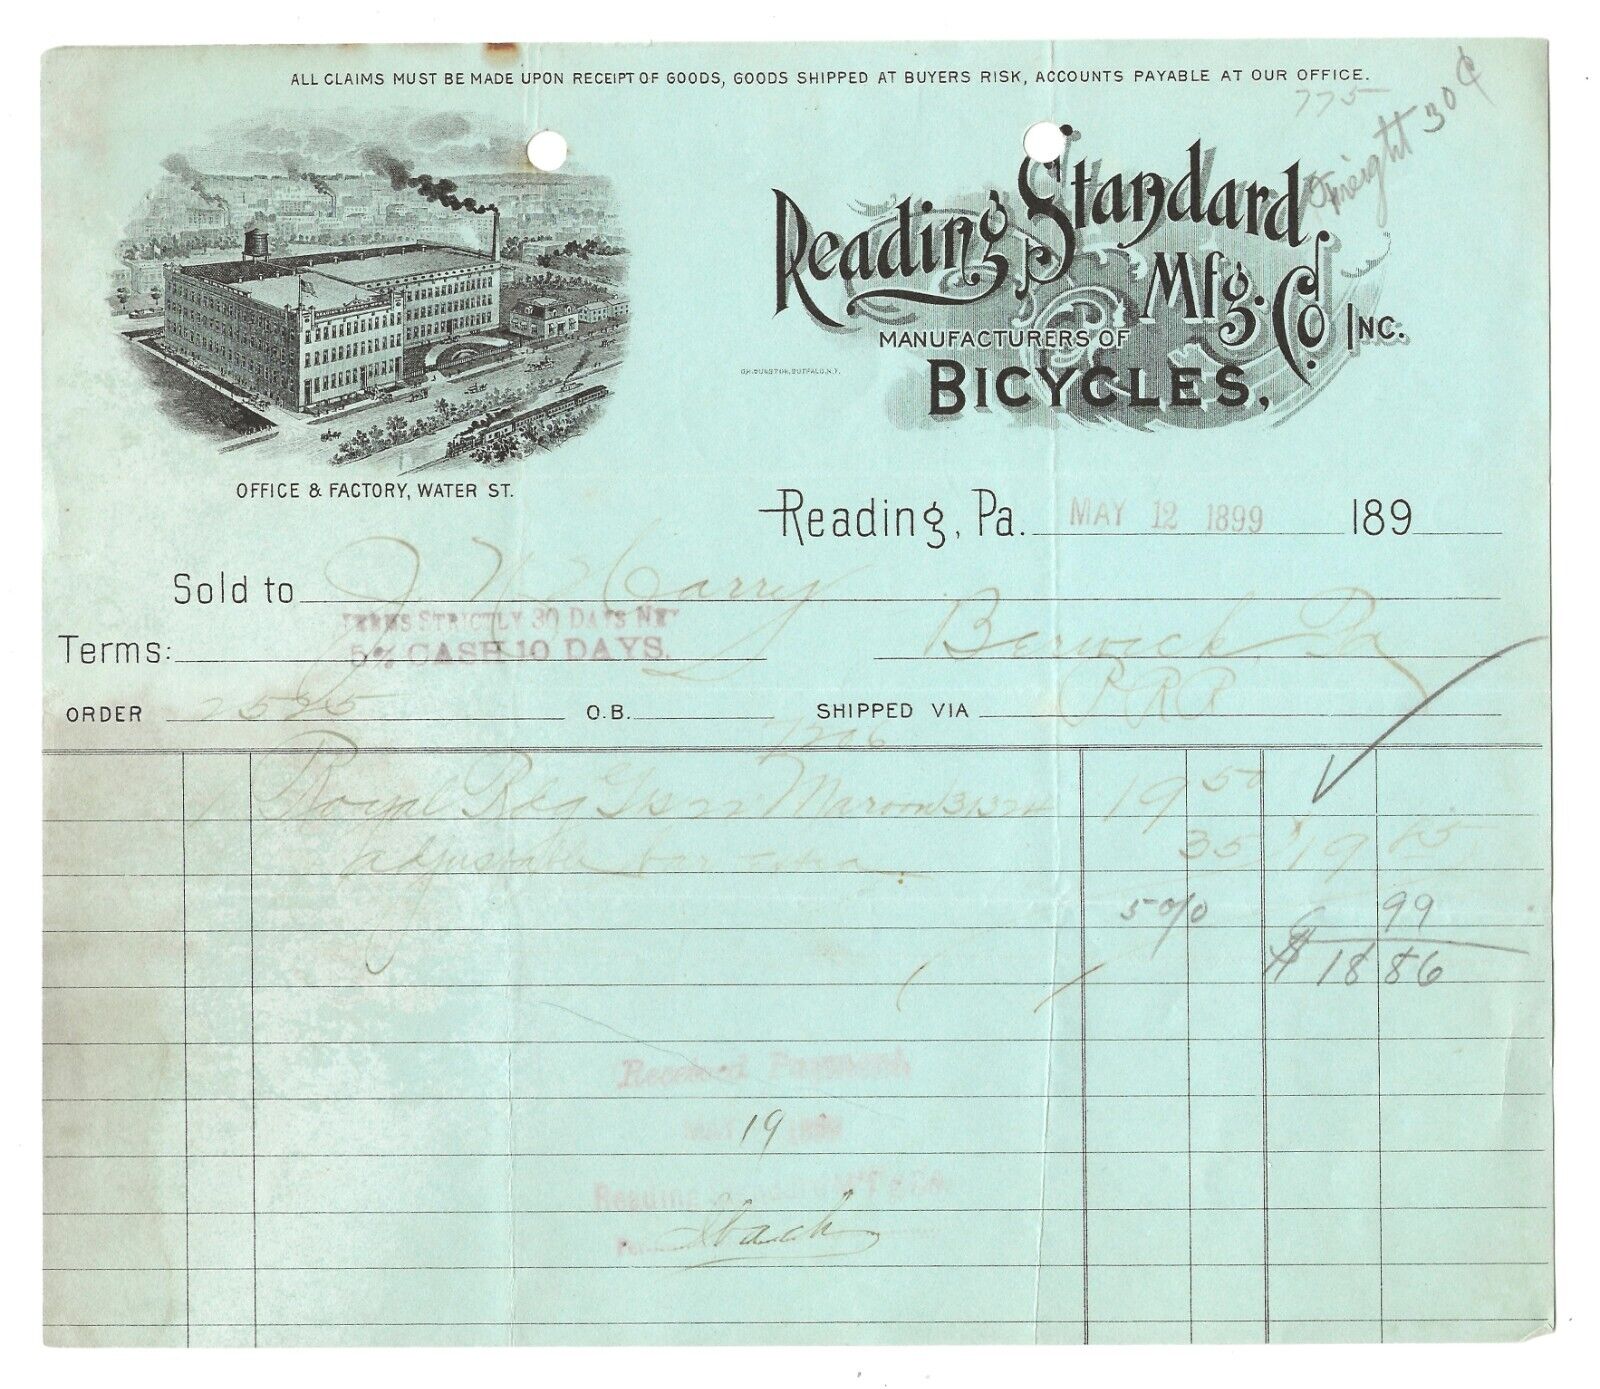 1899 Reading Standard bicycle company, Pa., history, bill head receipt, bike